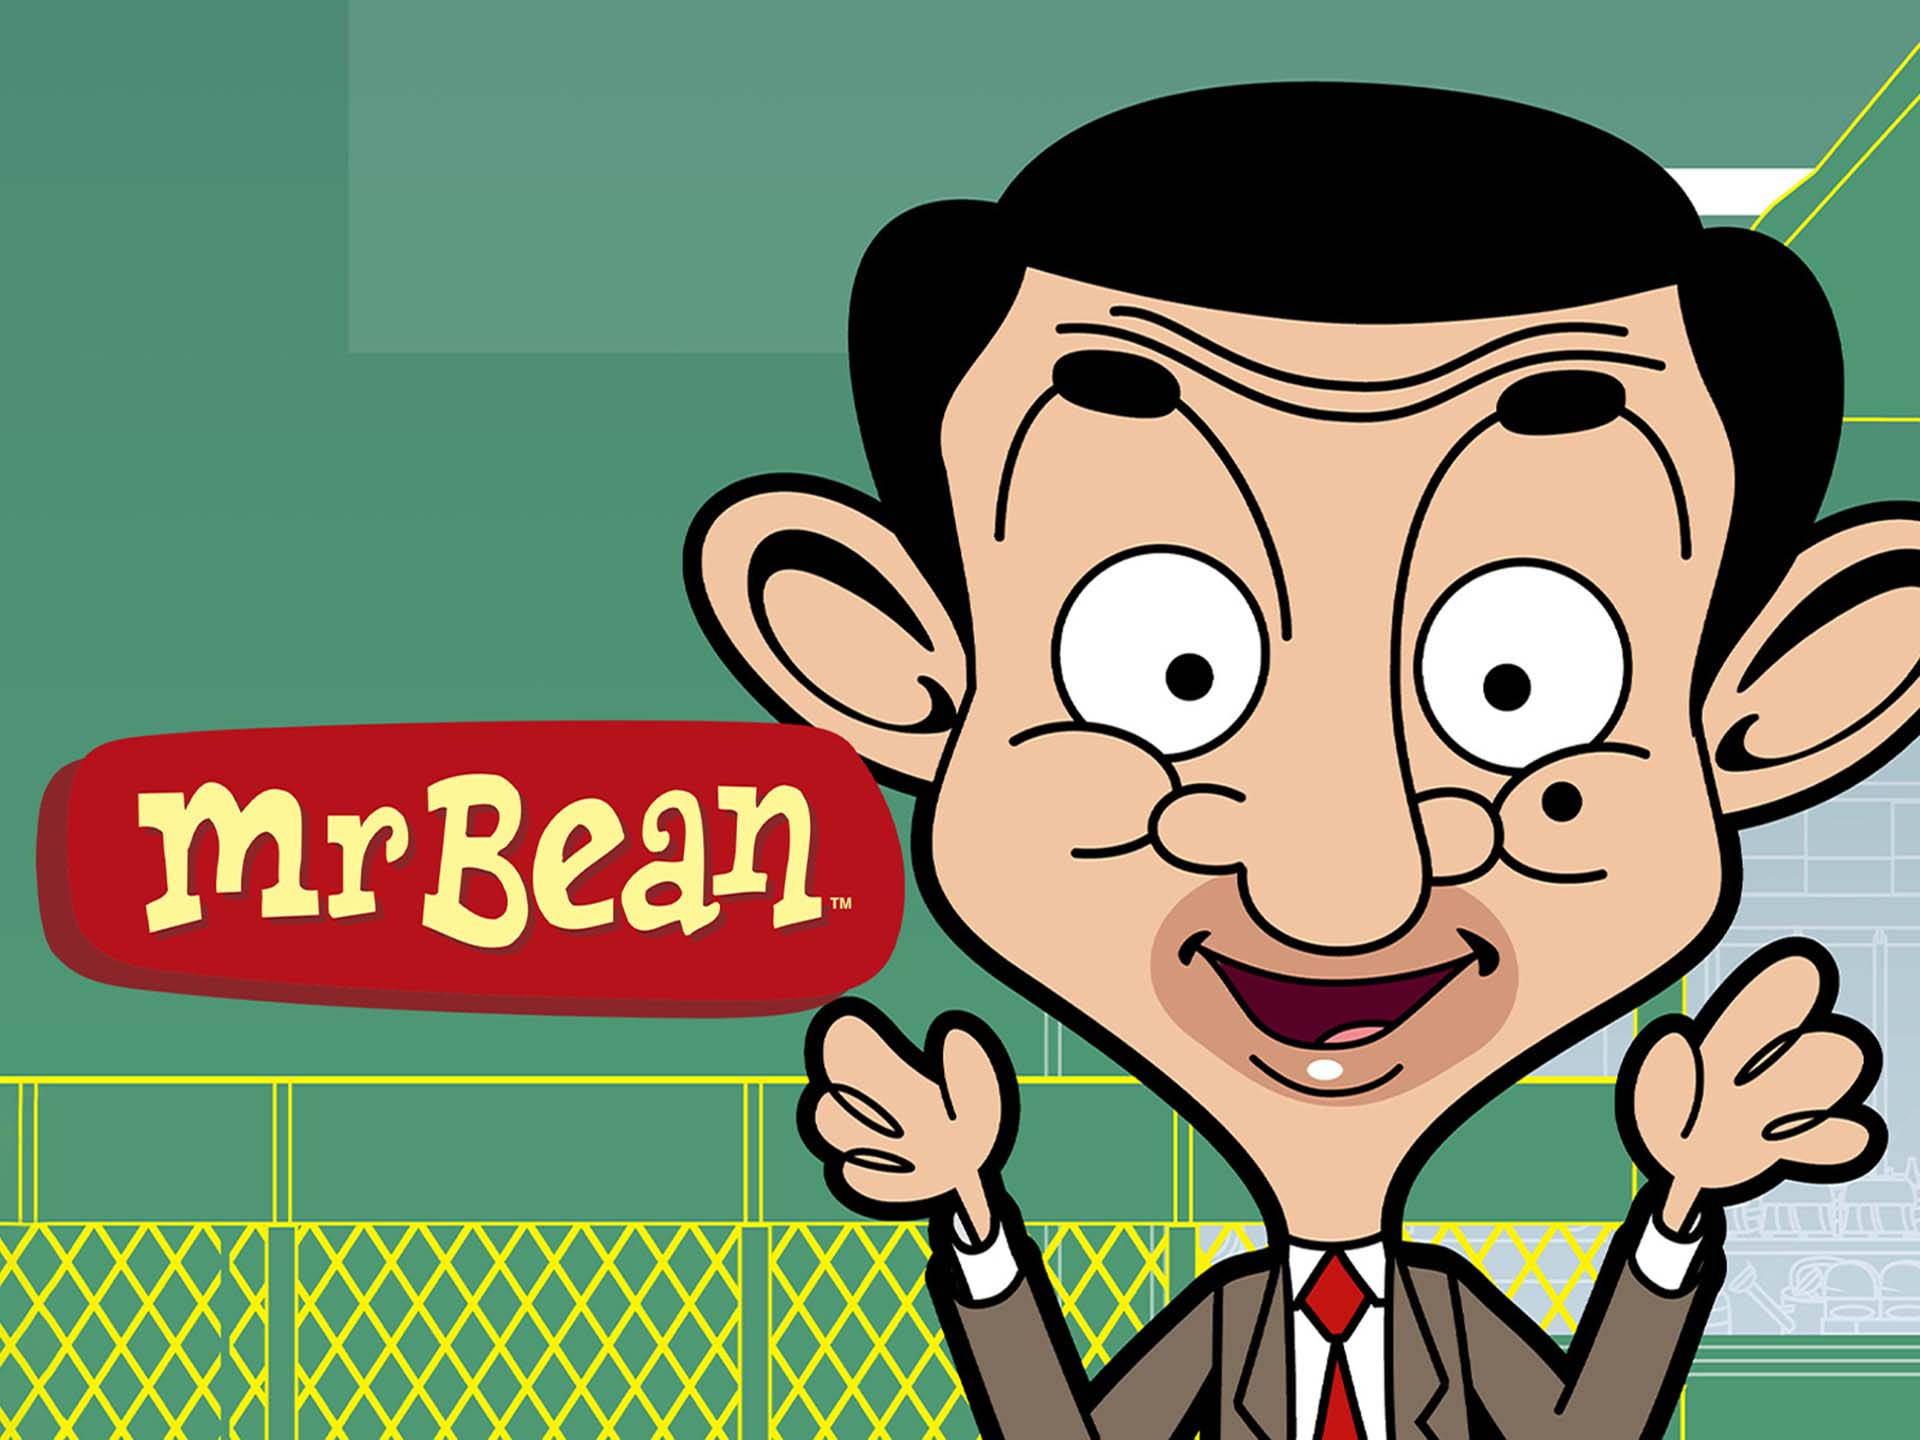 Free Mr Bean Wallpaper Downloads, [200+] Mr Bean Wallpapers for FREE |  